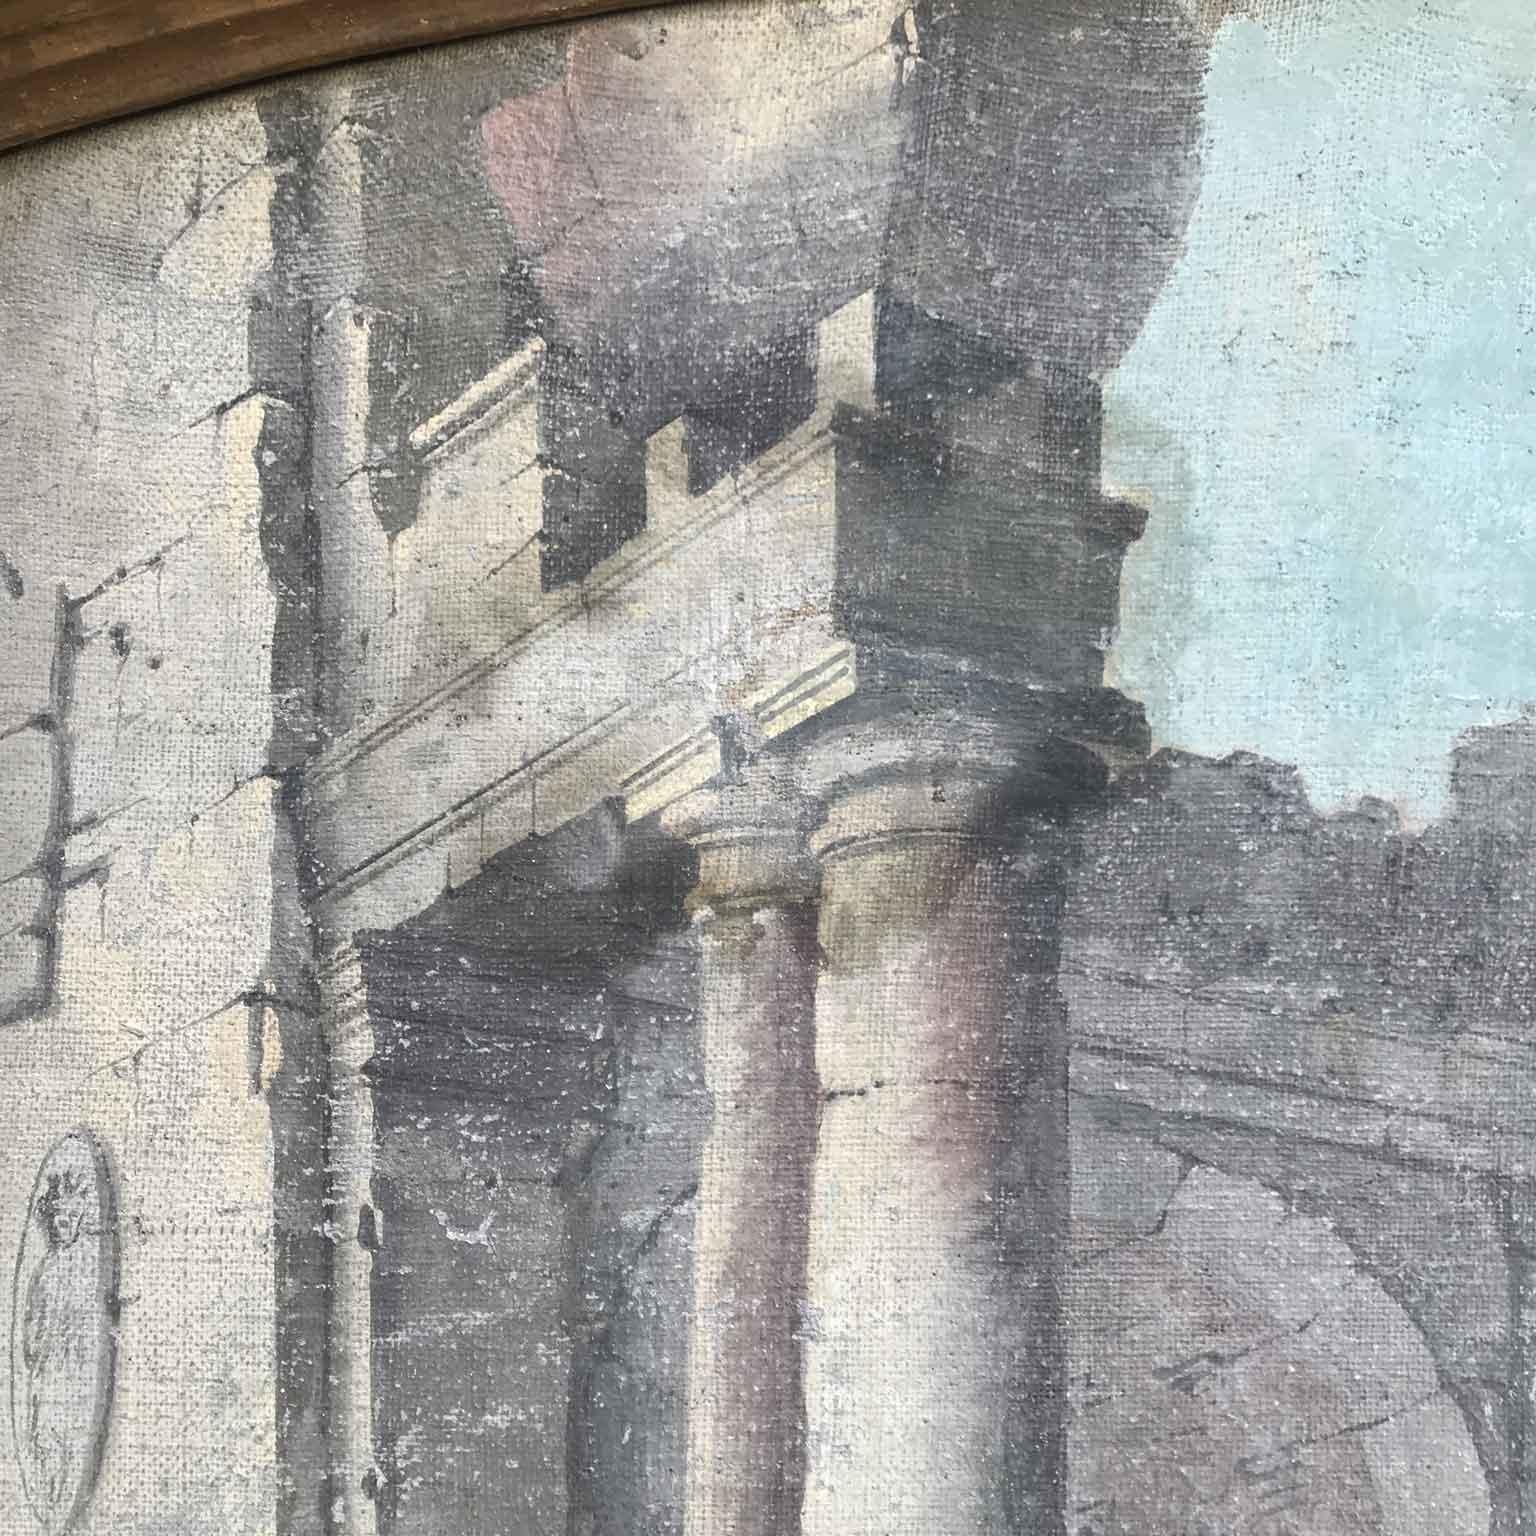 Silver Leaf 18th Century Italian Capriccio Large Sized Landscape with Ruin Columns